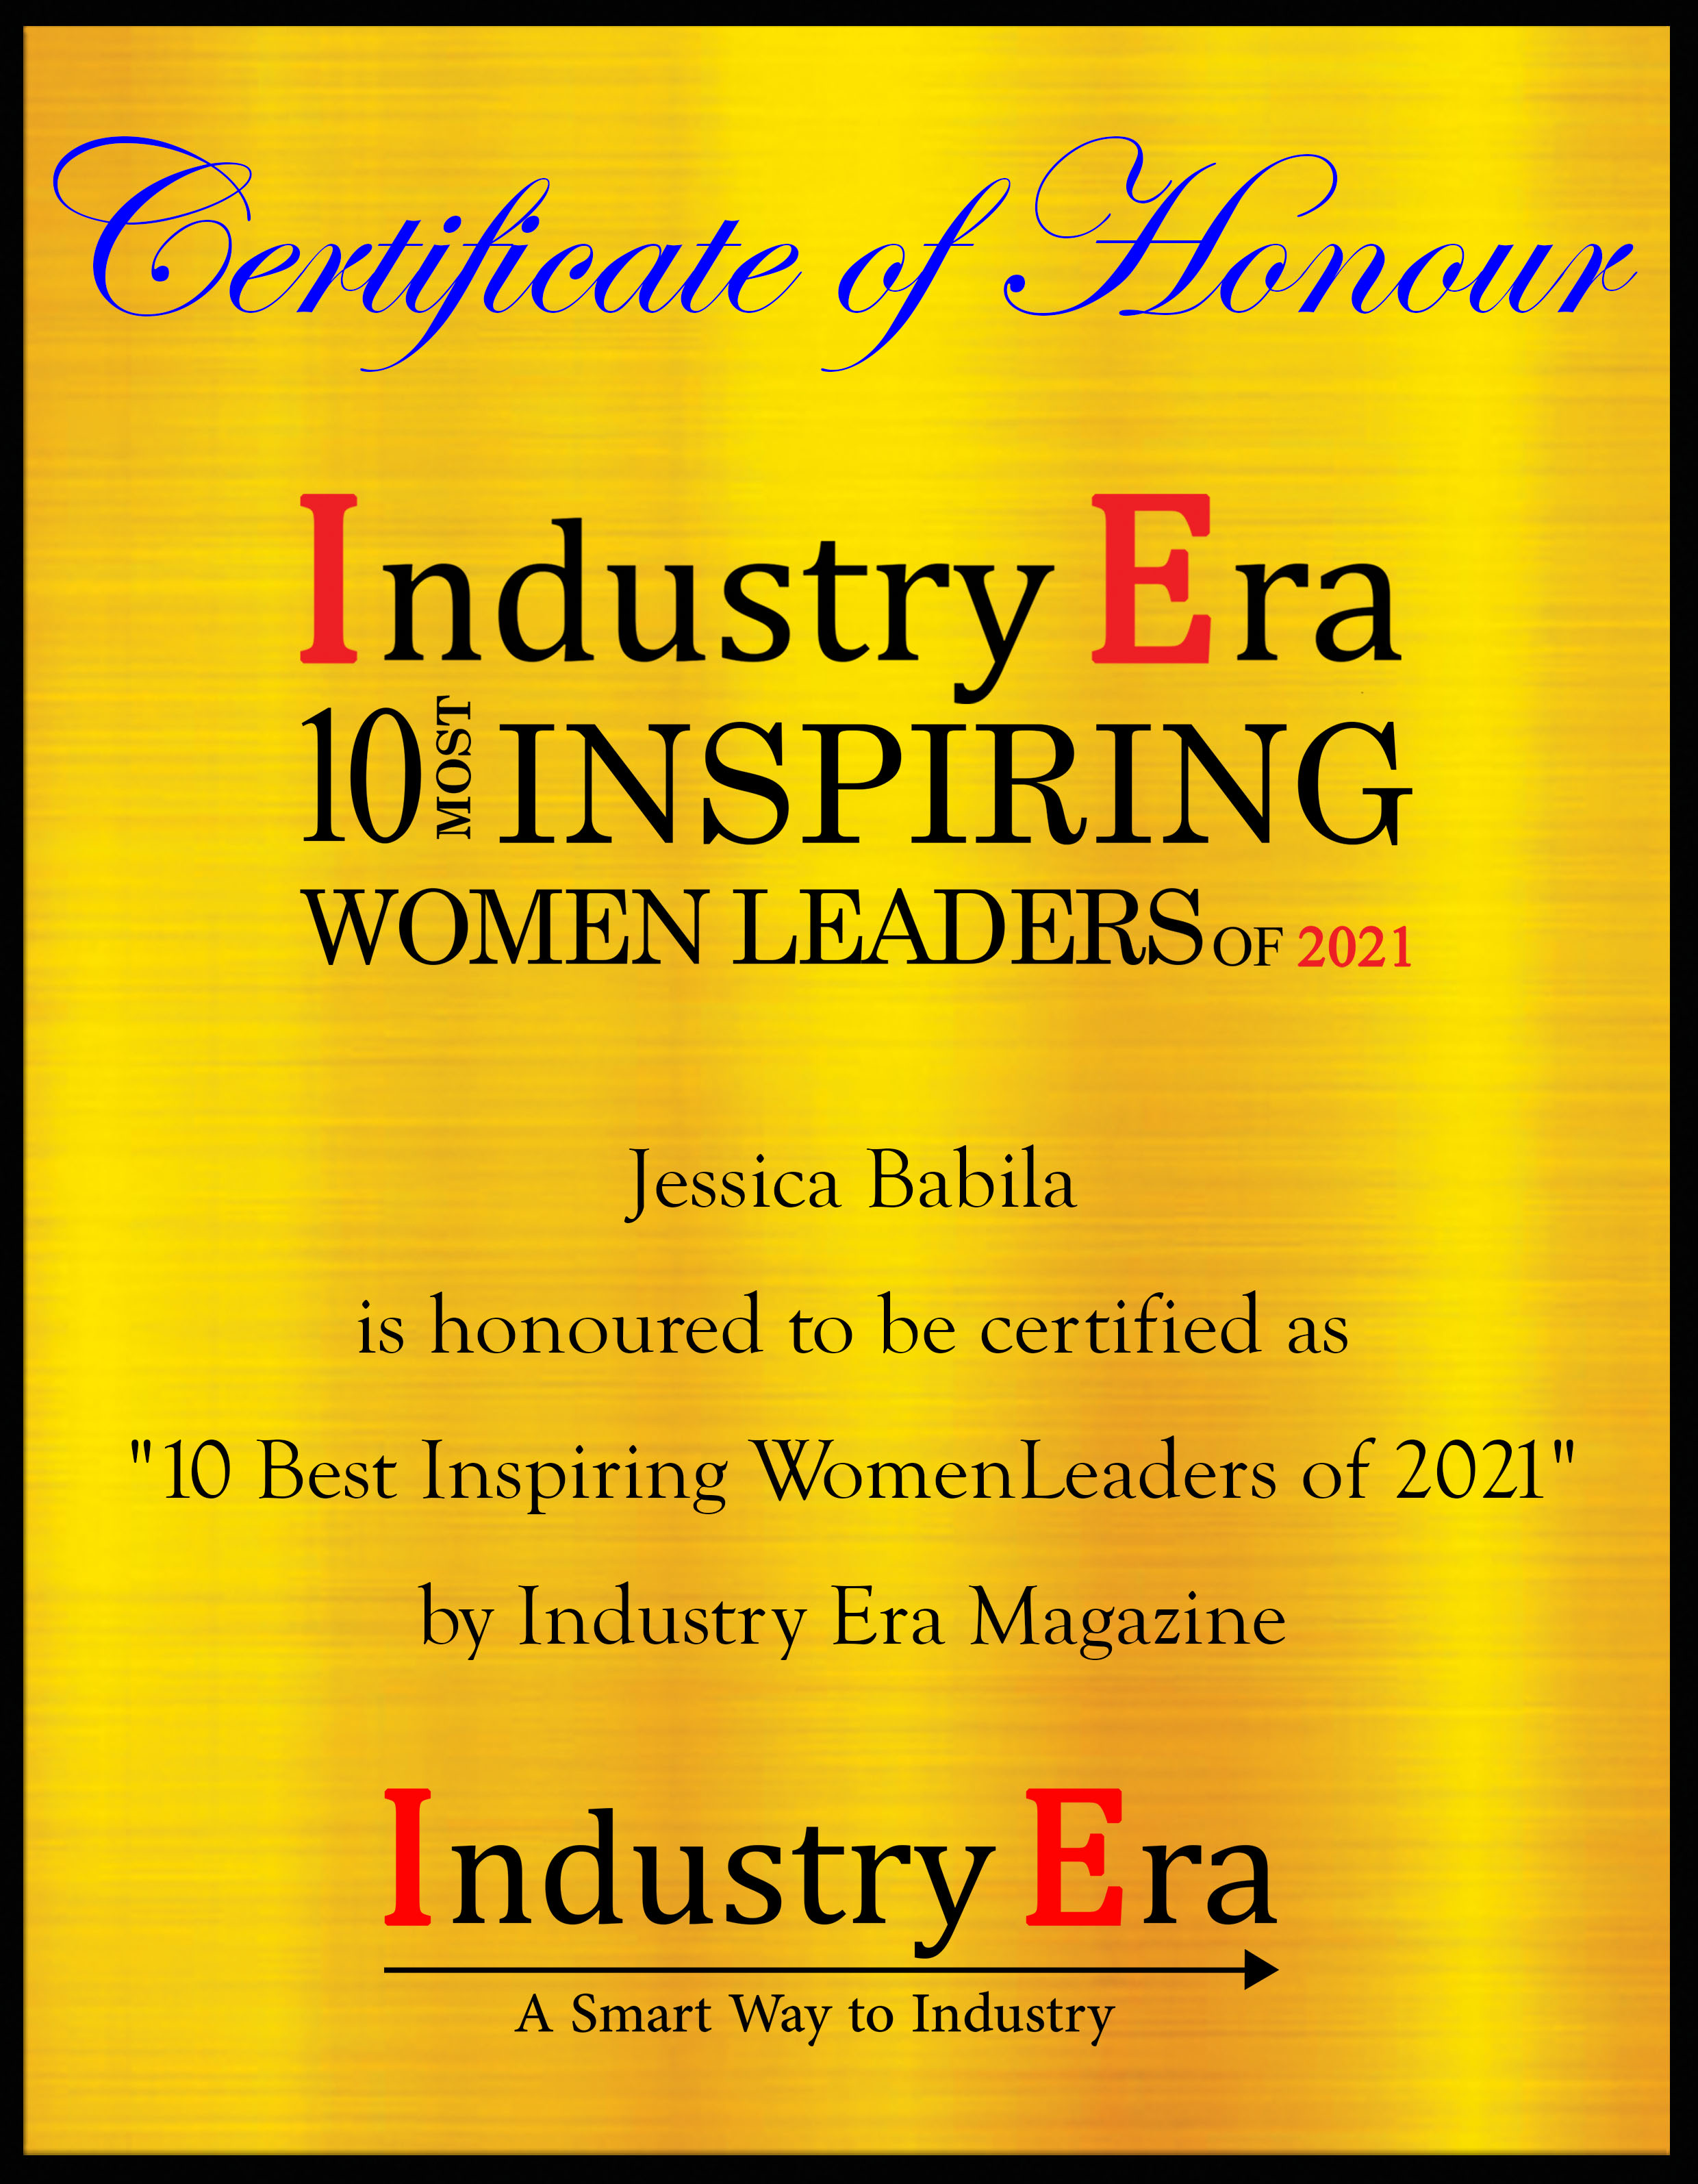 Jessica Babila Vice President Digital Marketing of STAMPEDE, Best Inspiring WomenLeaders of 2021